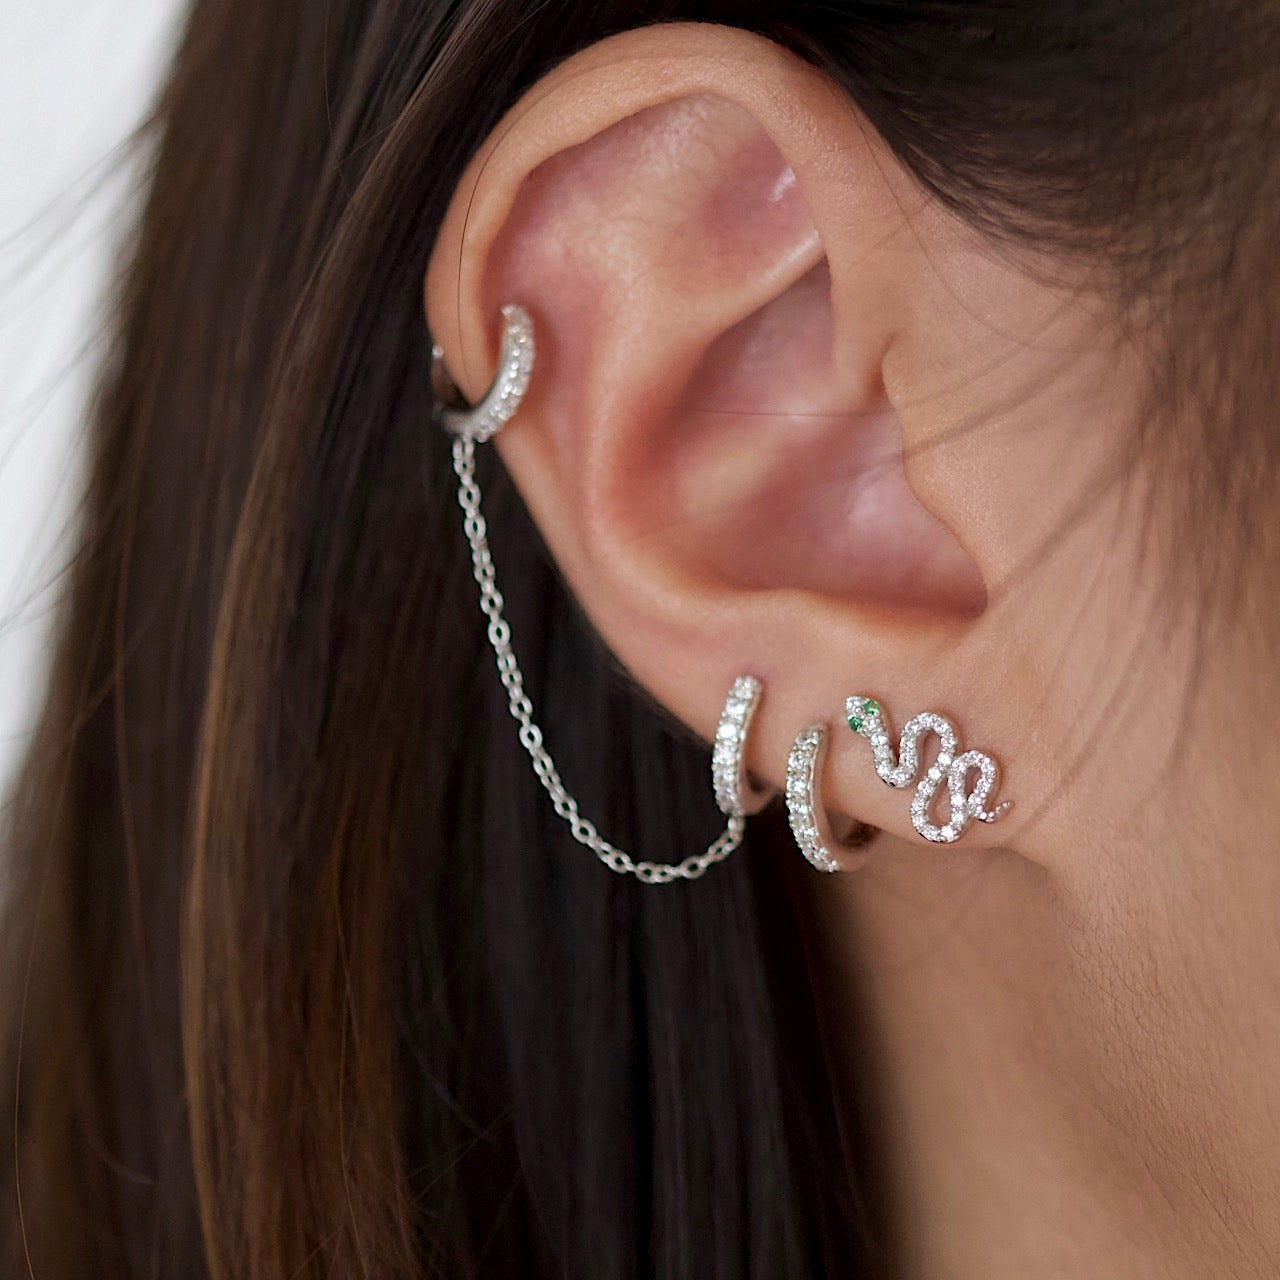 J&CO Jewellery Sparkly Snake Stud Earrings Gold